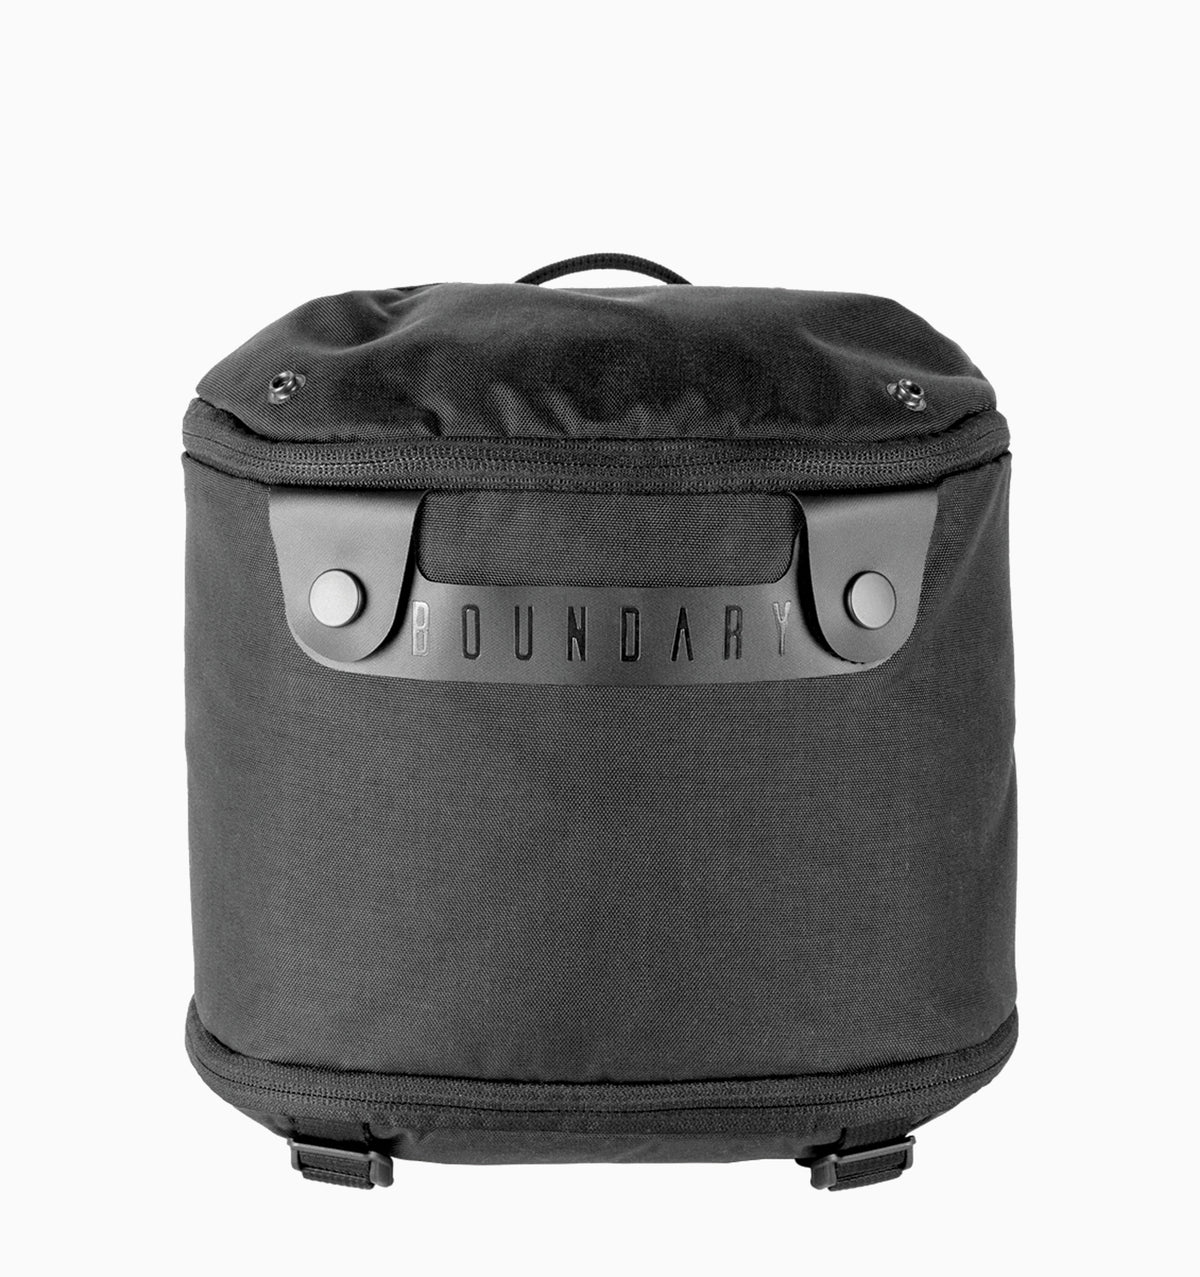 Boundary Supply Prima System Modular Travel Backpack 16" 38L - Obsidian Black